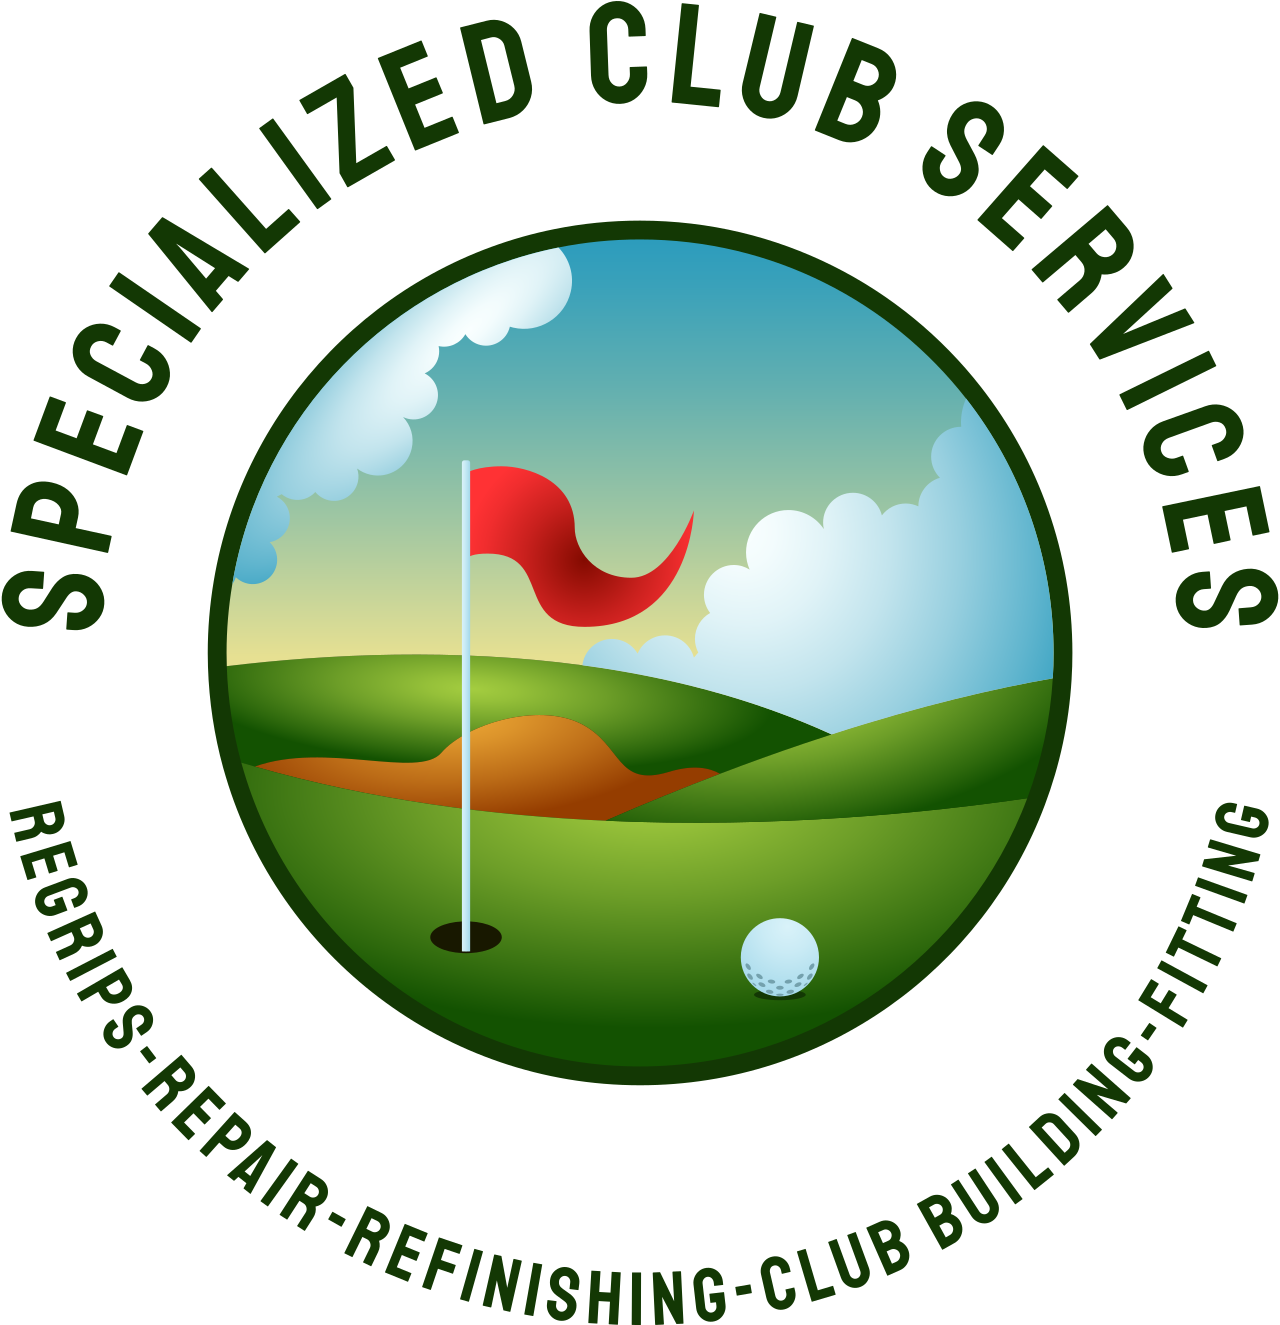 Specialized Club Services's logo